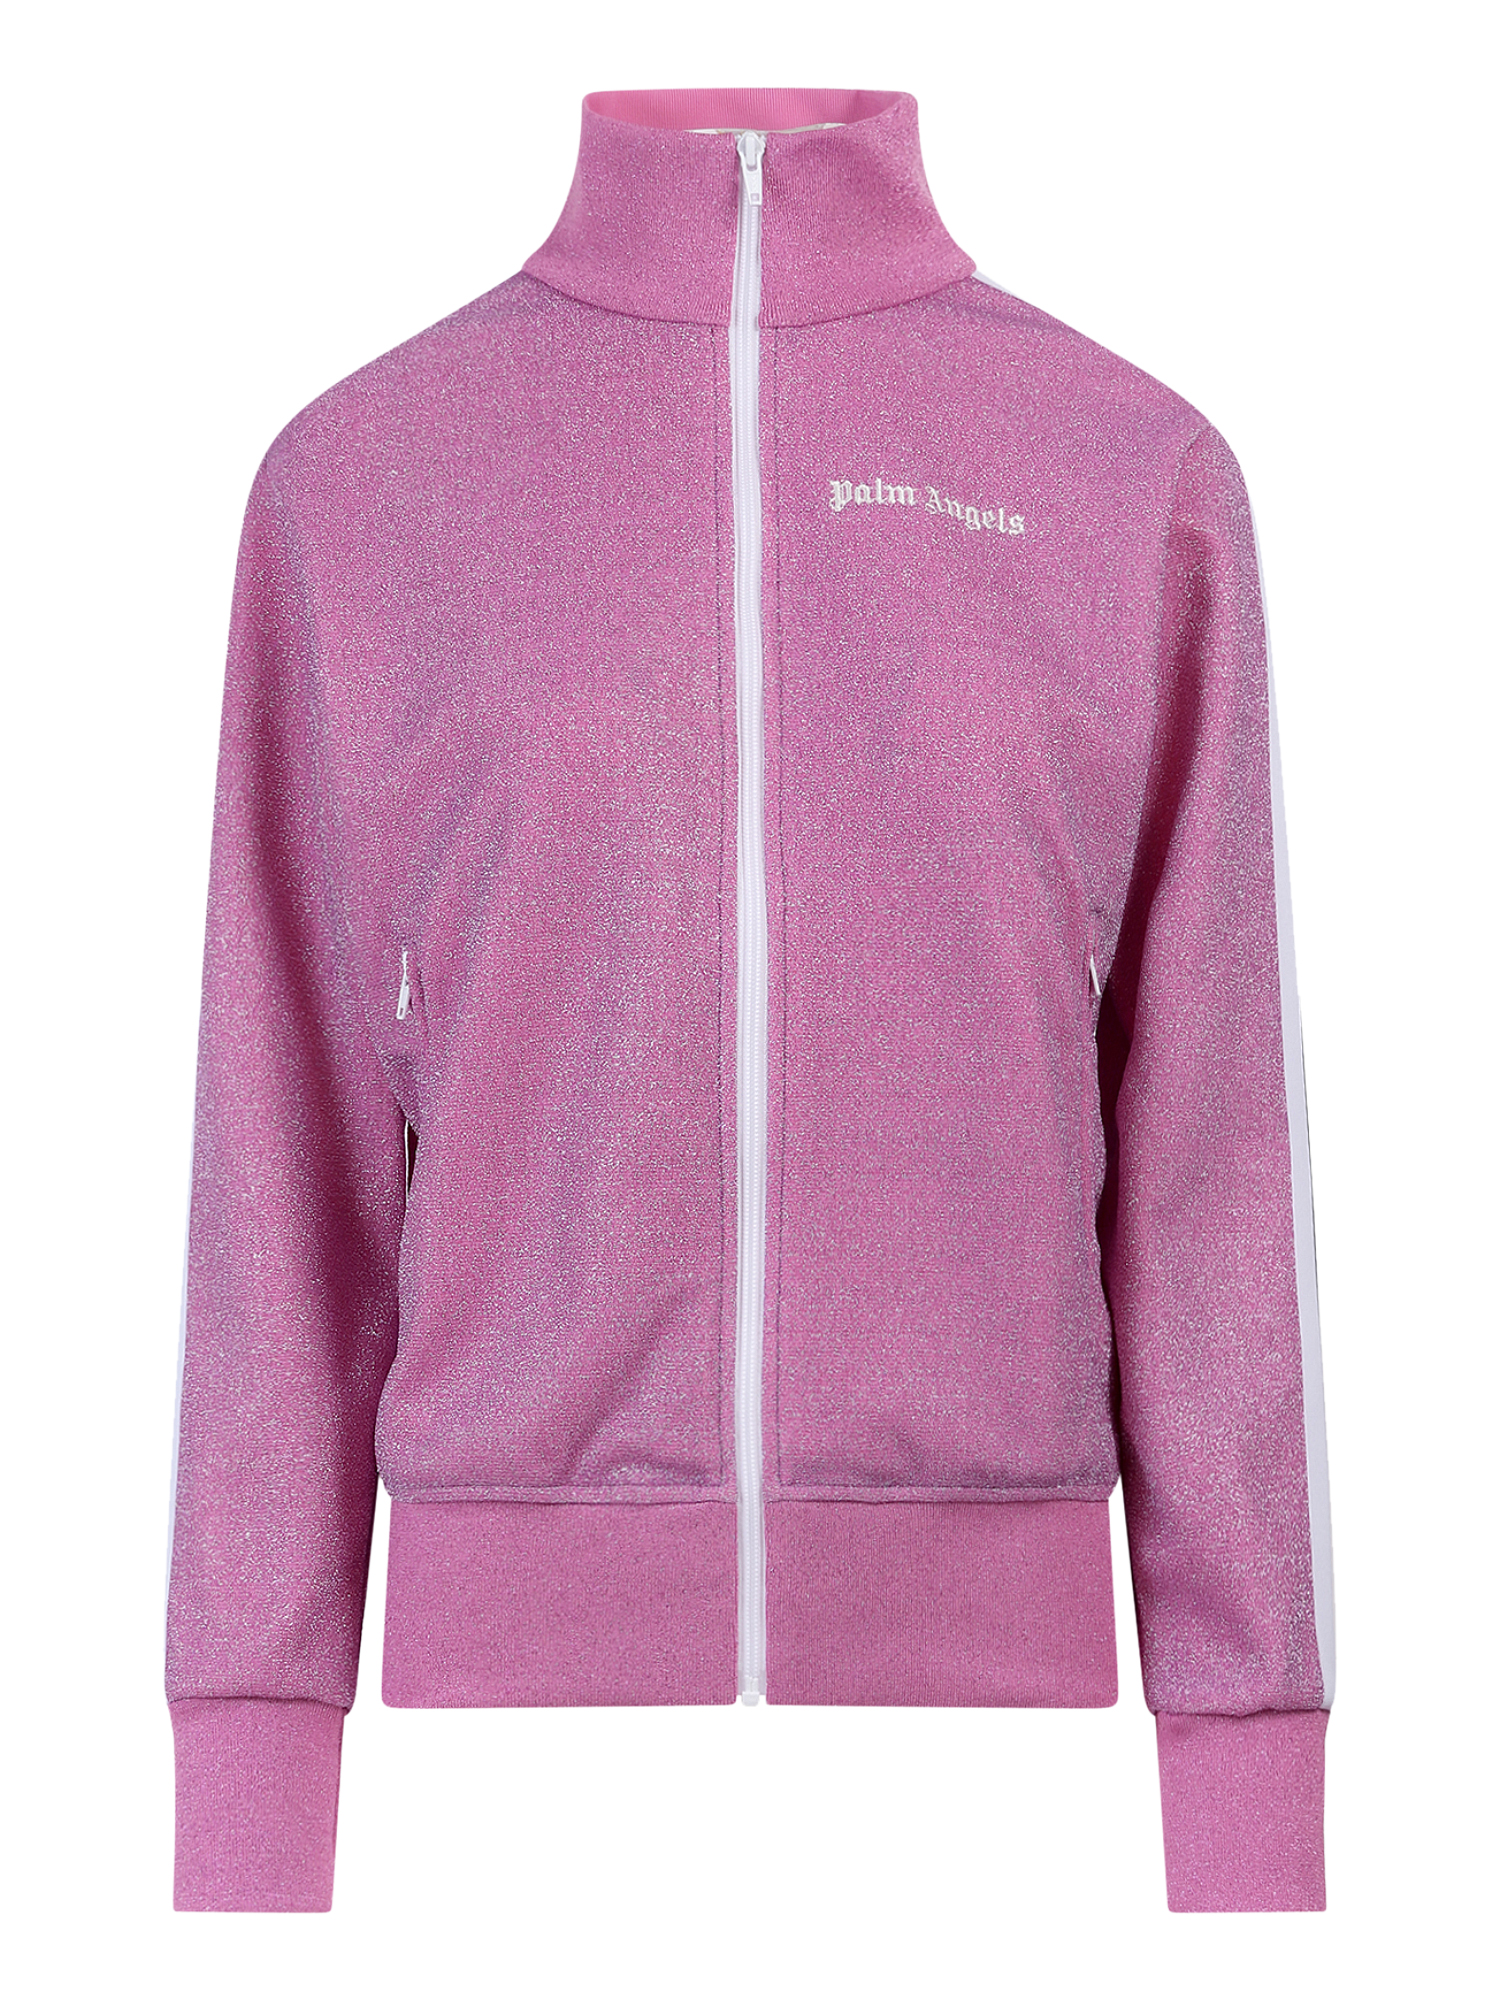 Palm Angels Femme Pulls et sweat-shirts Pink Synthetic Fibers